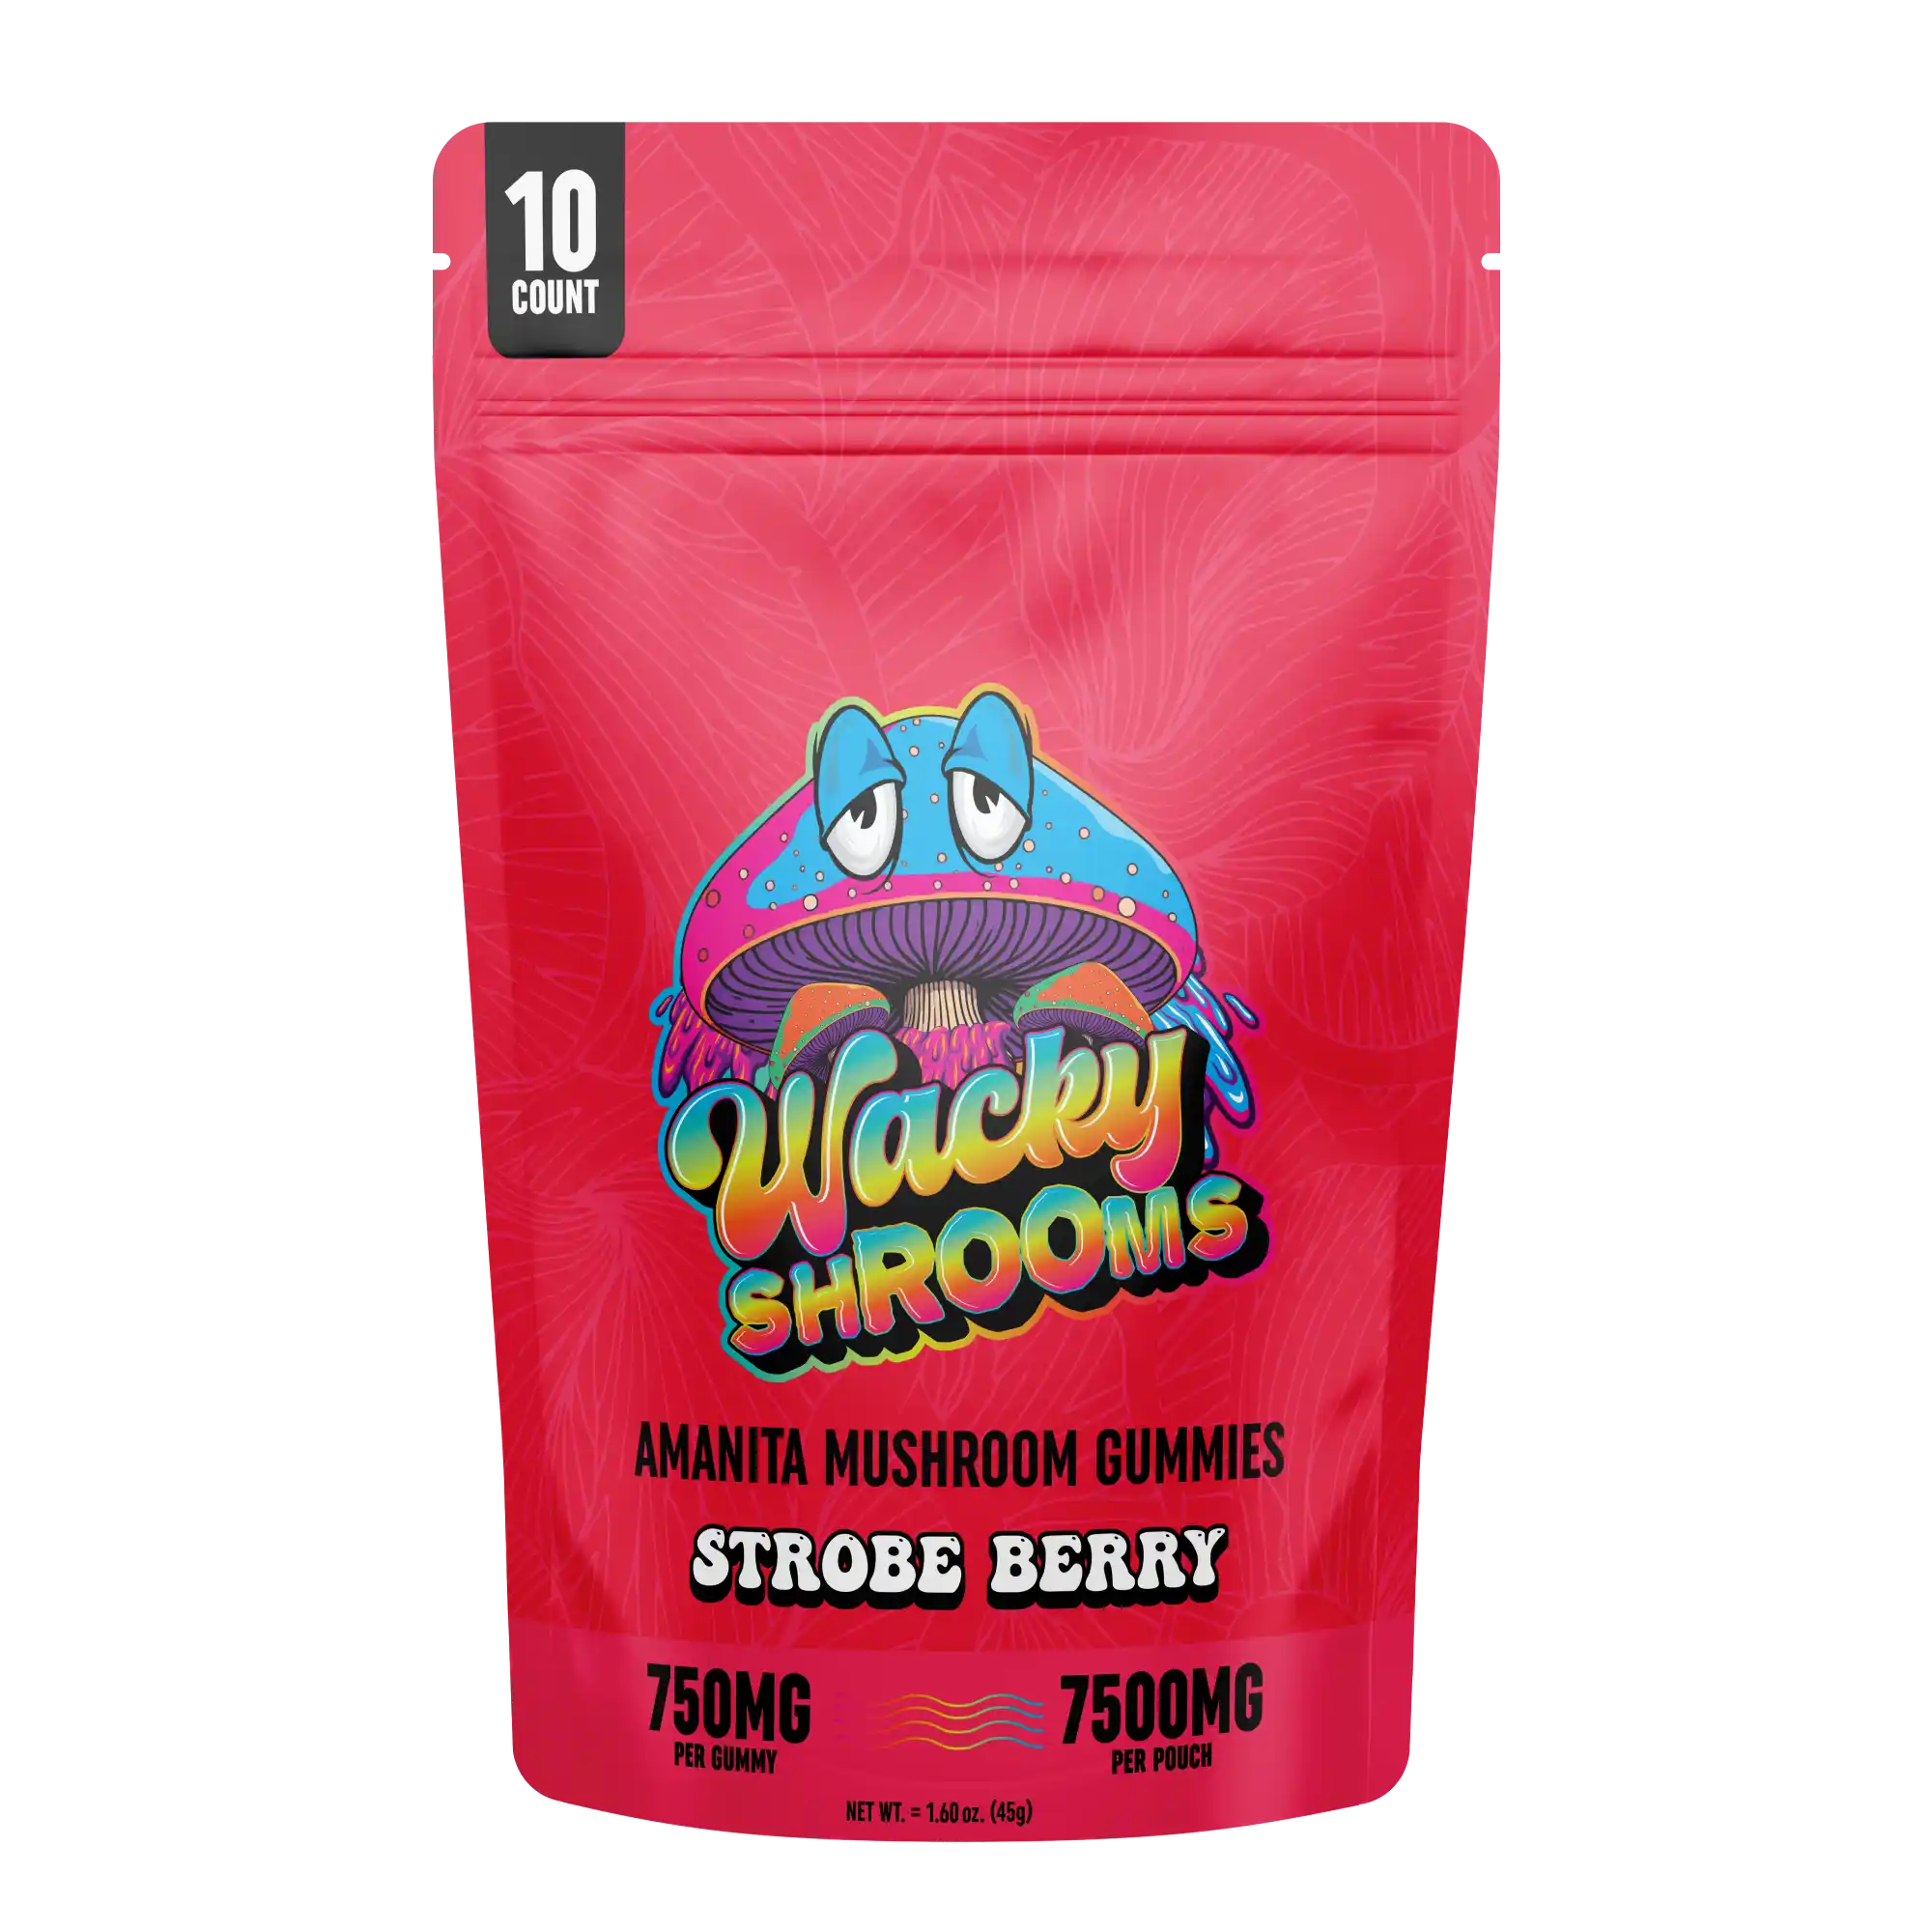 Wacky Shrooms: Strobe Berry Amanita Mushroom Gummies